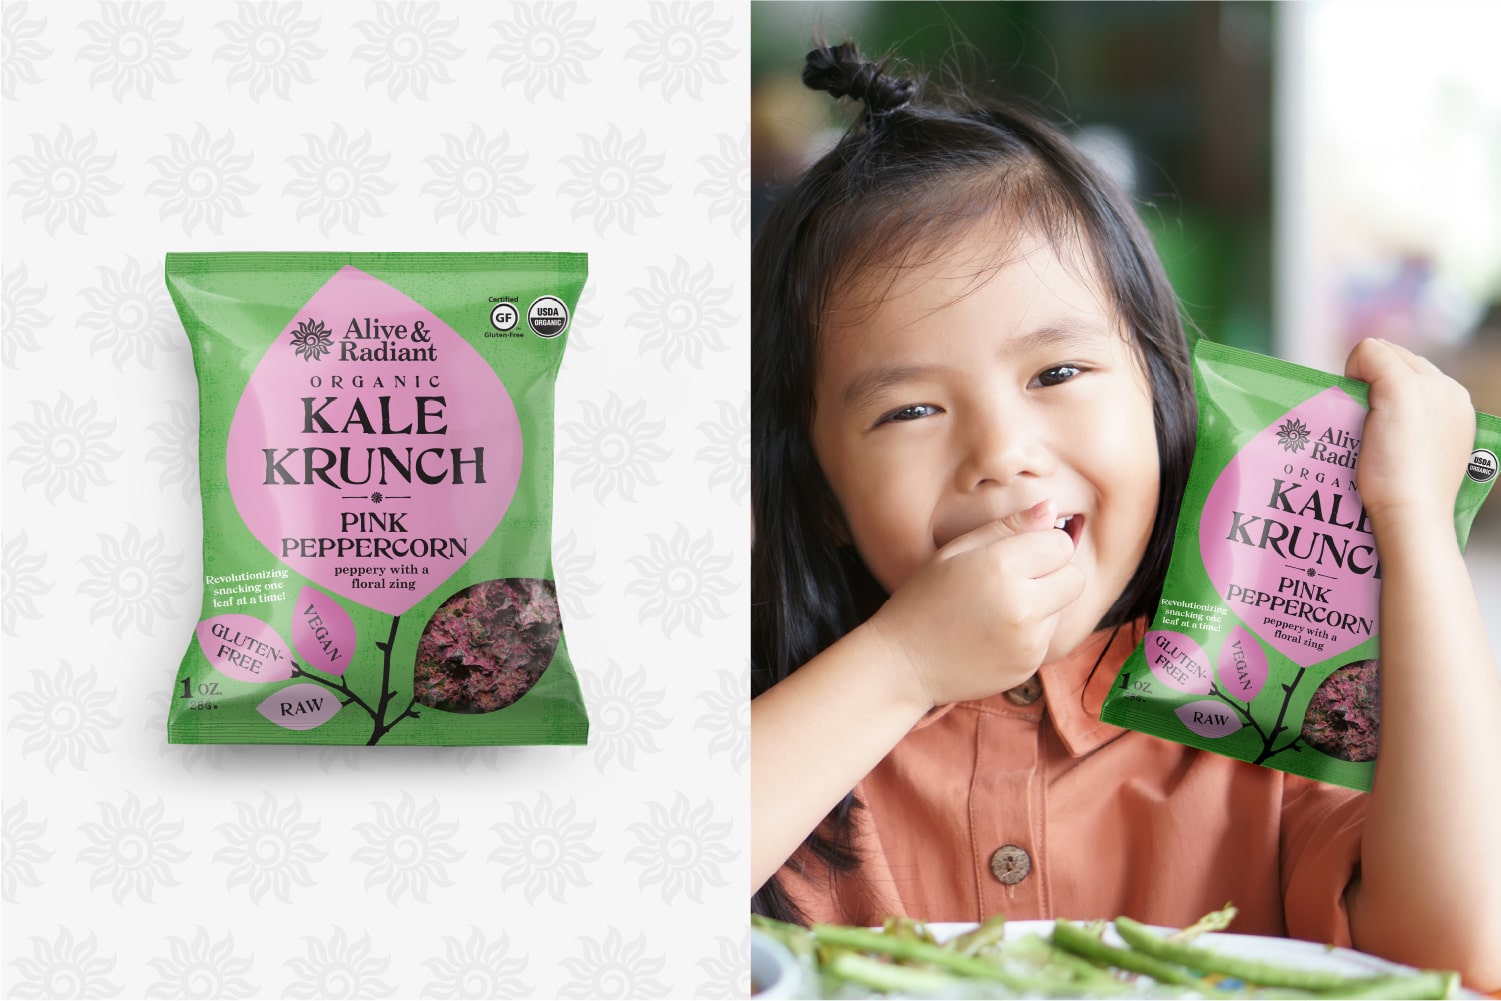 Little girl with Kale Krunch peppercorn